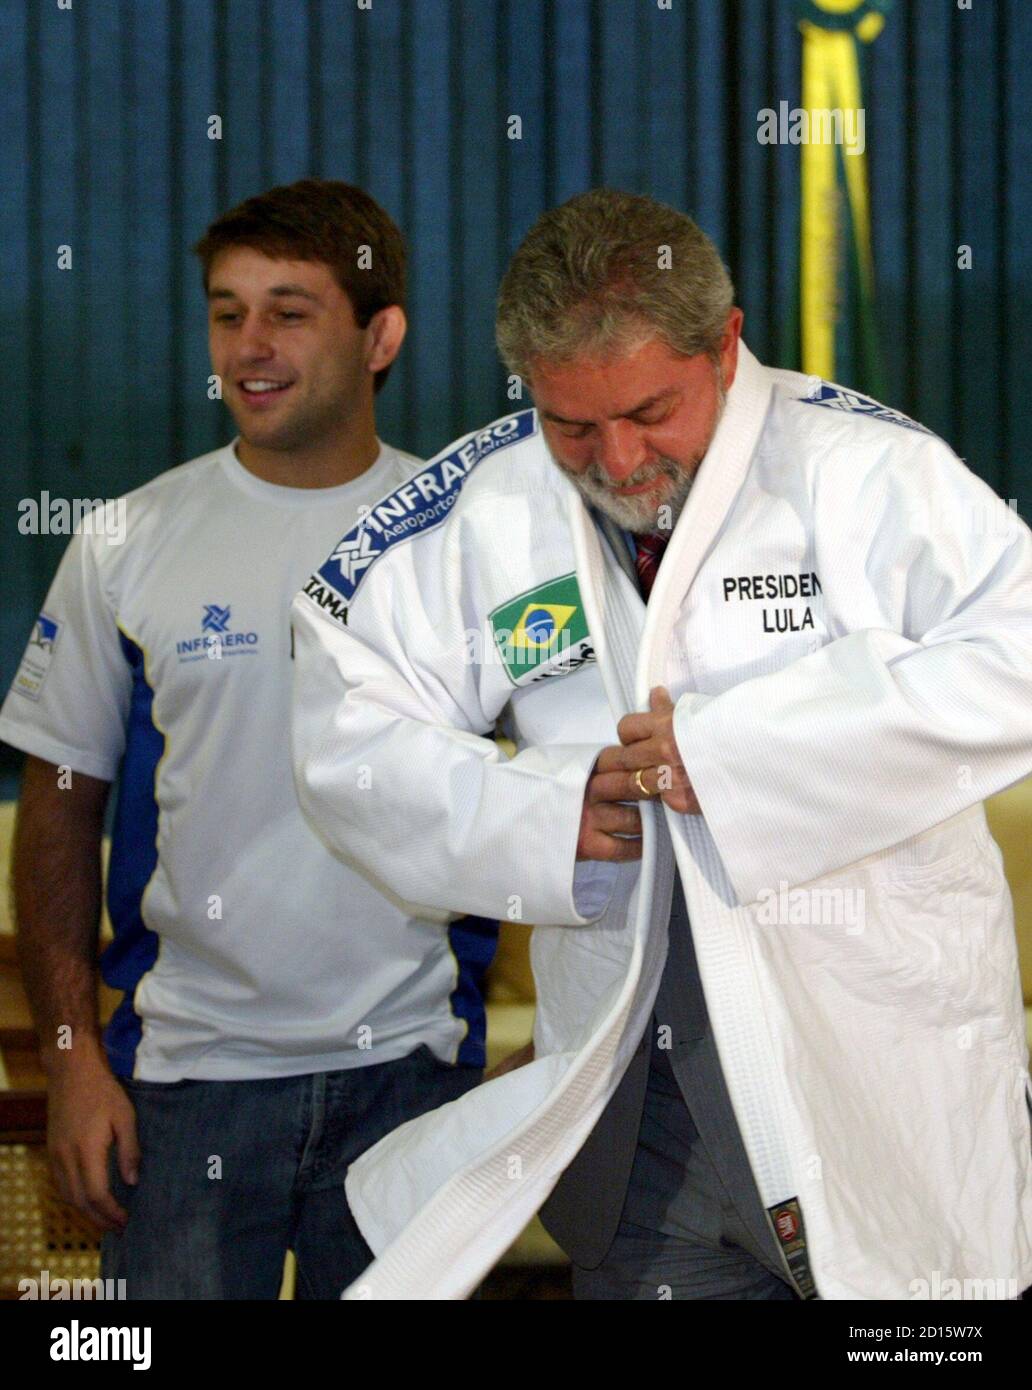 Brazil's President Luiz Inacio Lula da Silva (R) wears a judo jacket as  Brazilian National Judo member Joao Derly Junior watches during a meeting  with the Brazilian nationa judo squad at the